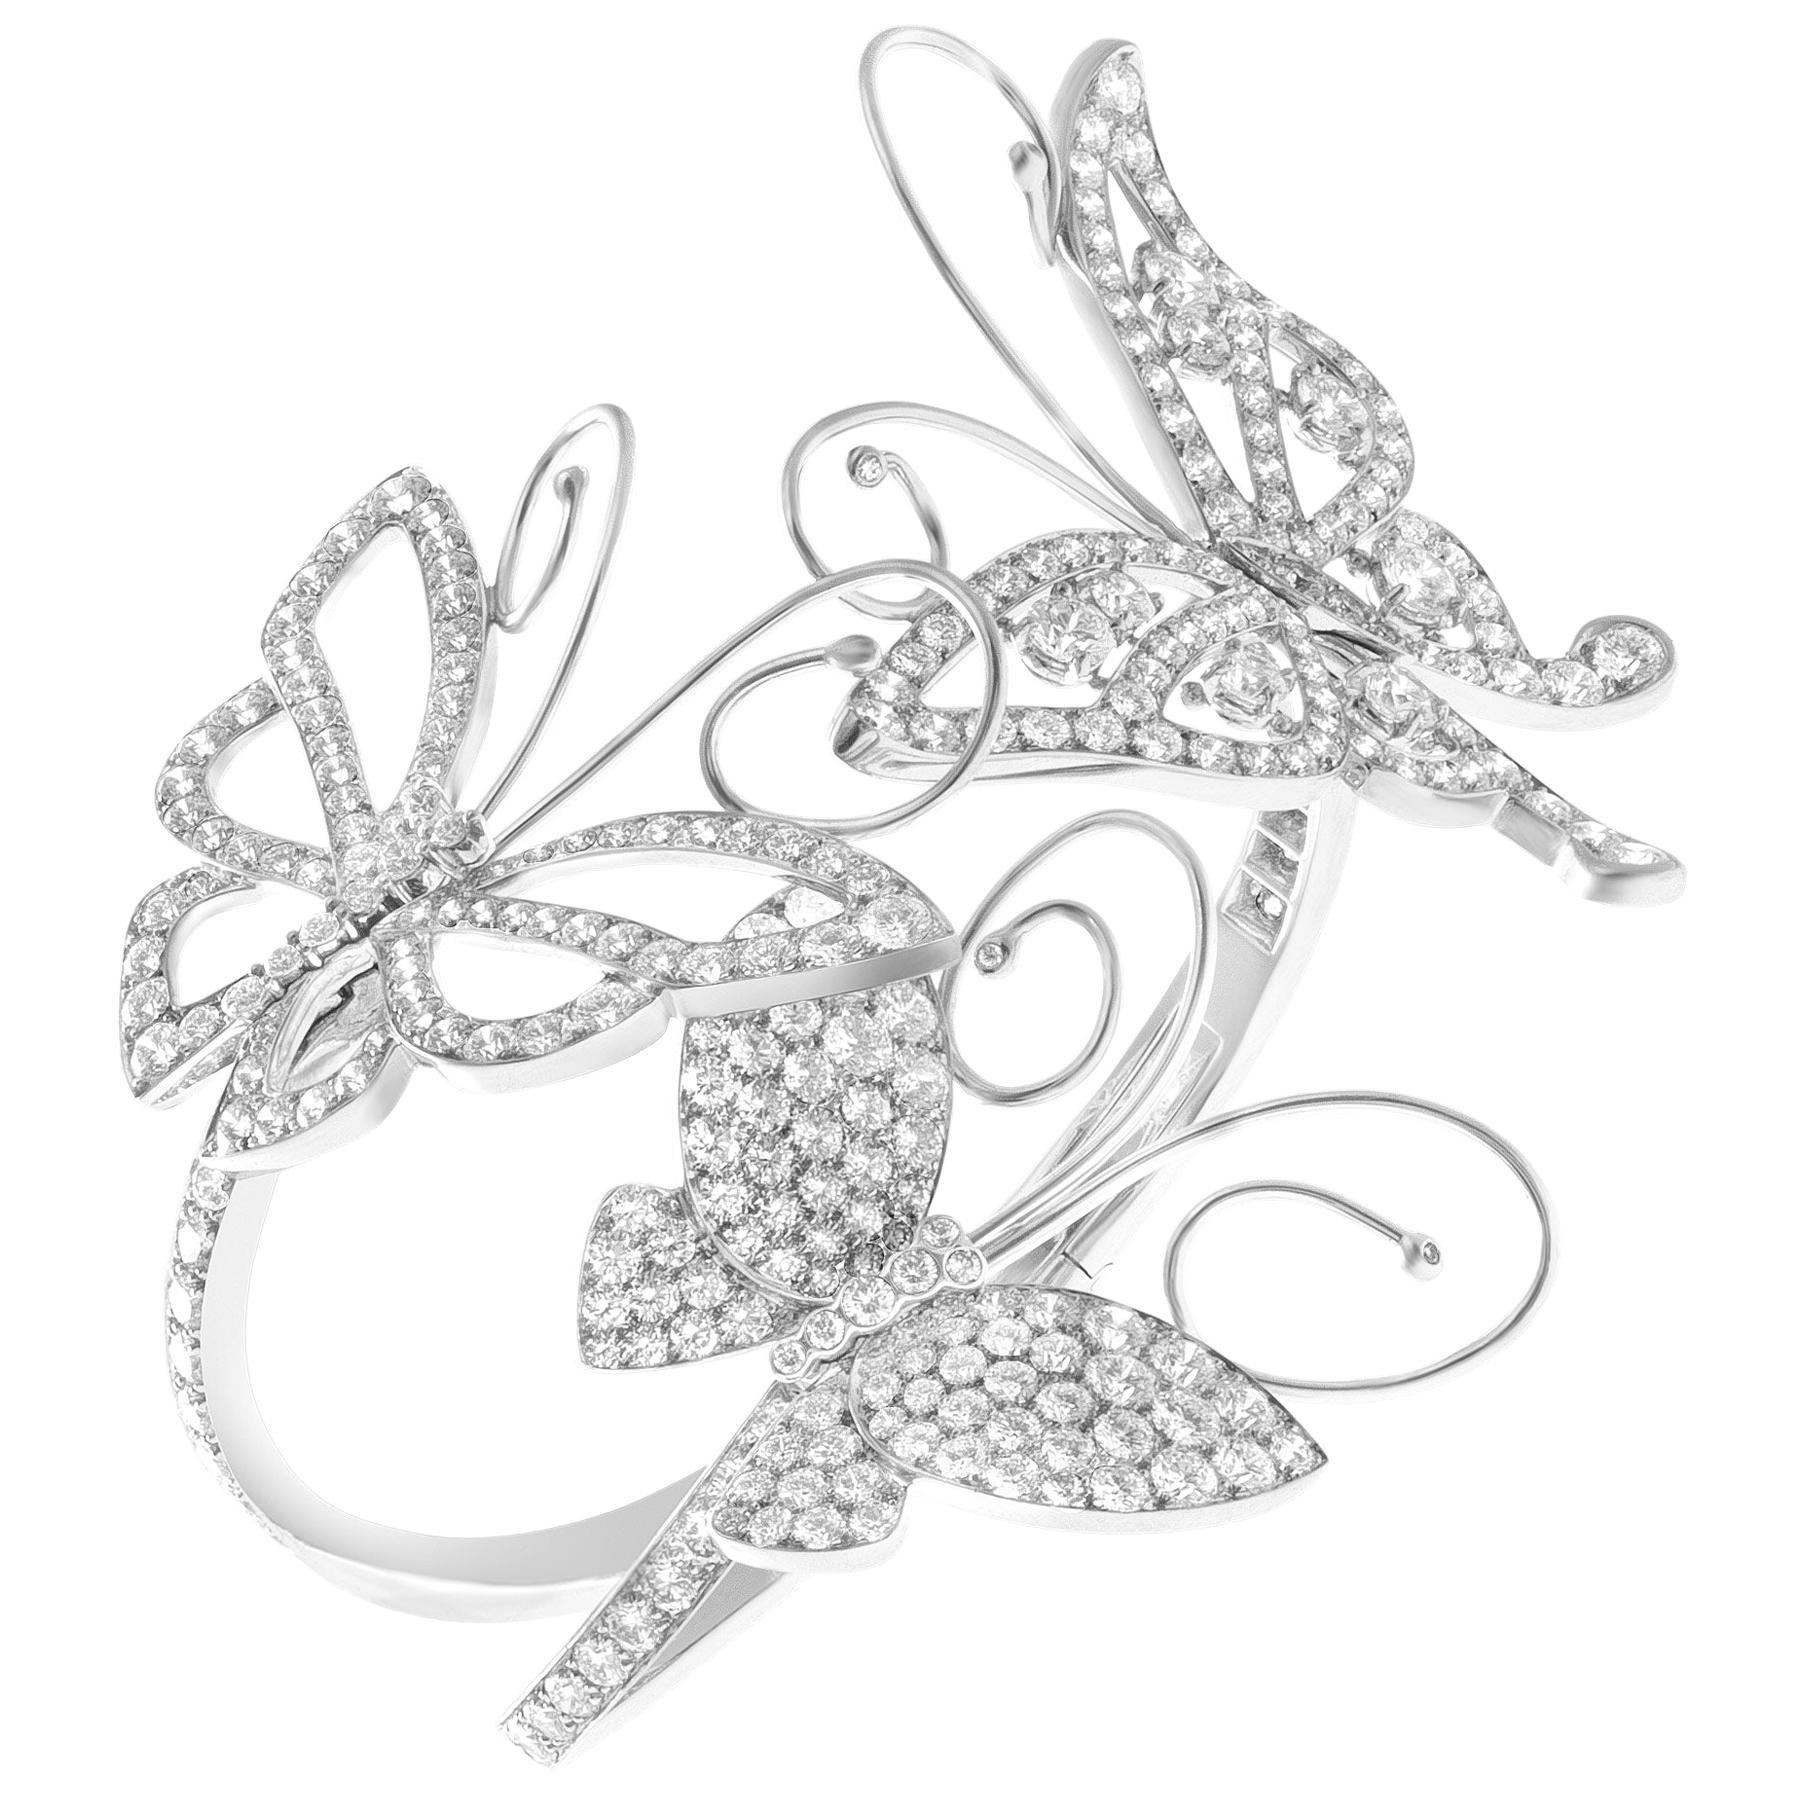 Van Cleef & Arpels" Flying Butterfly" Bracelet Small Set in 18 Karat White Gold